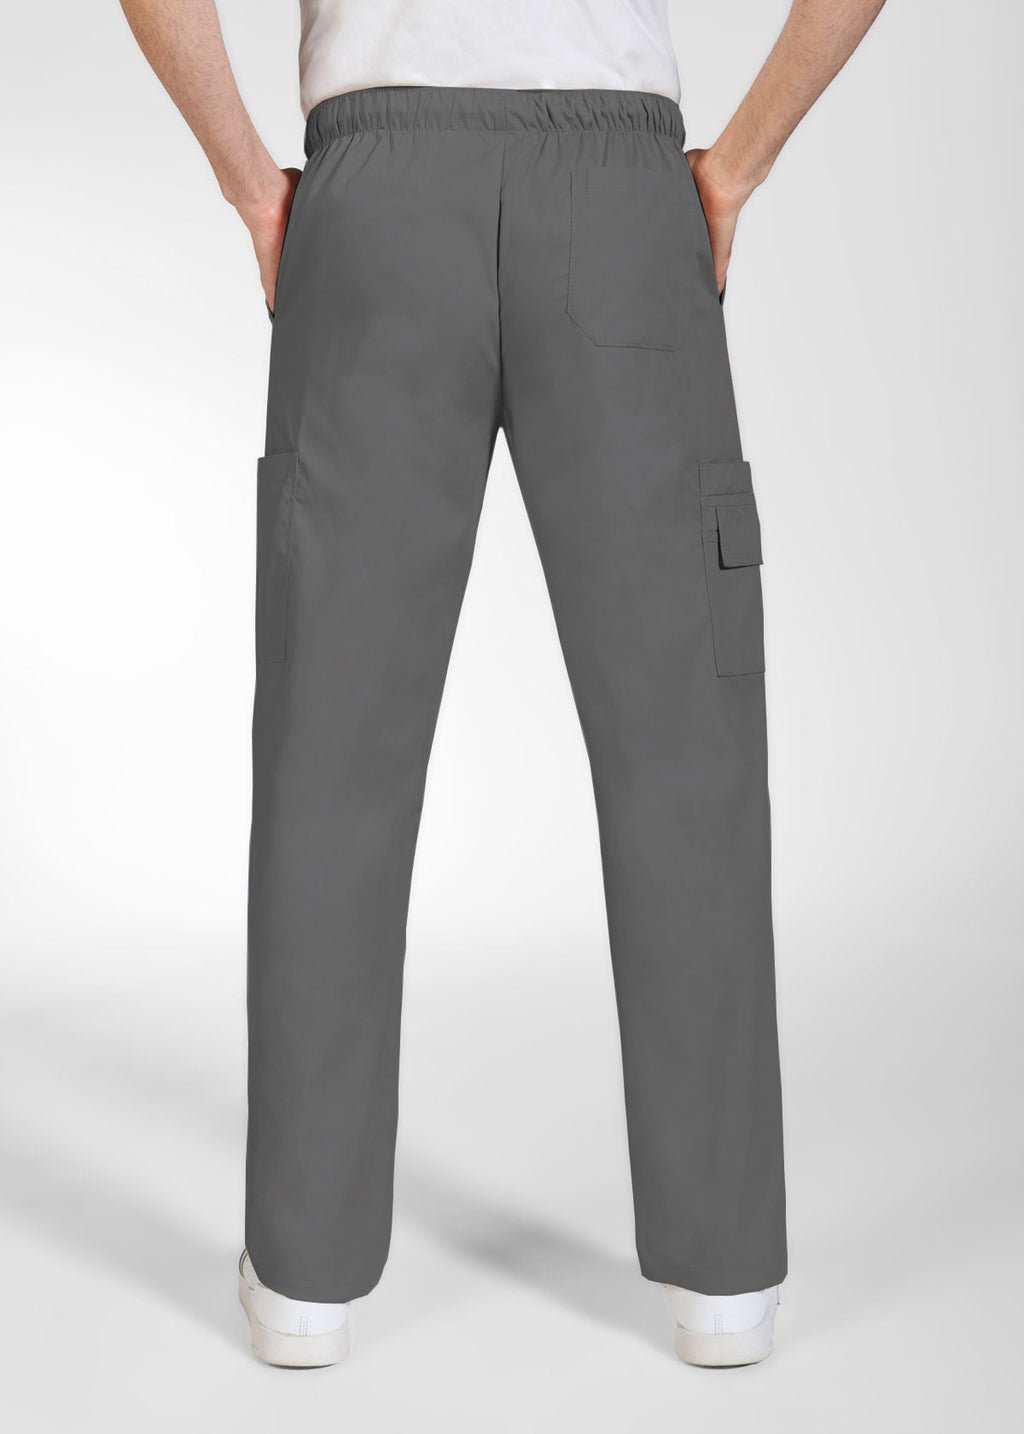 Unisex Drawstring/Elastic MOBB Scrub Pant – Dixie Uniforms Ltd.